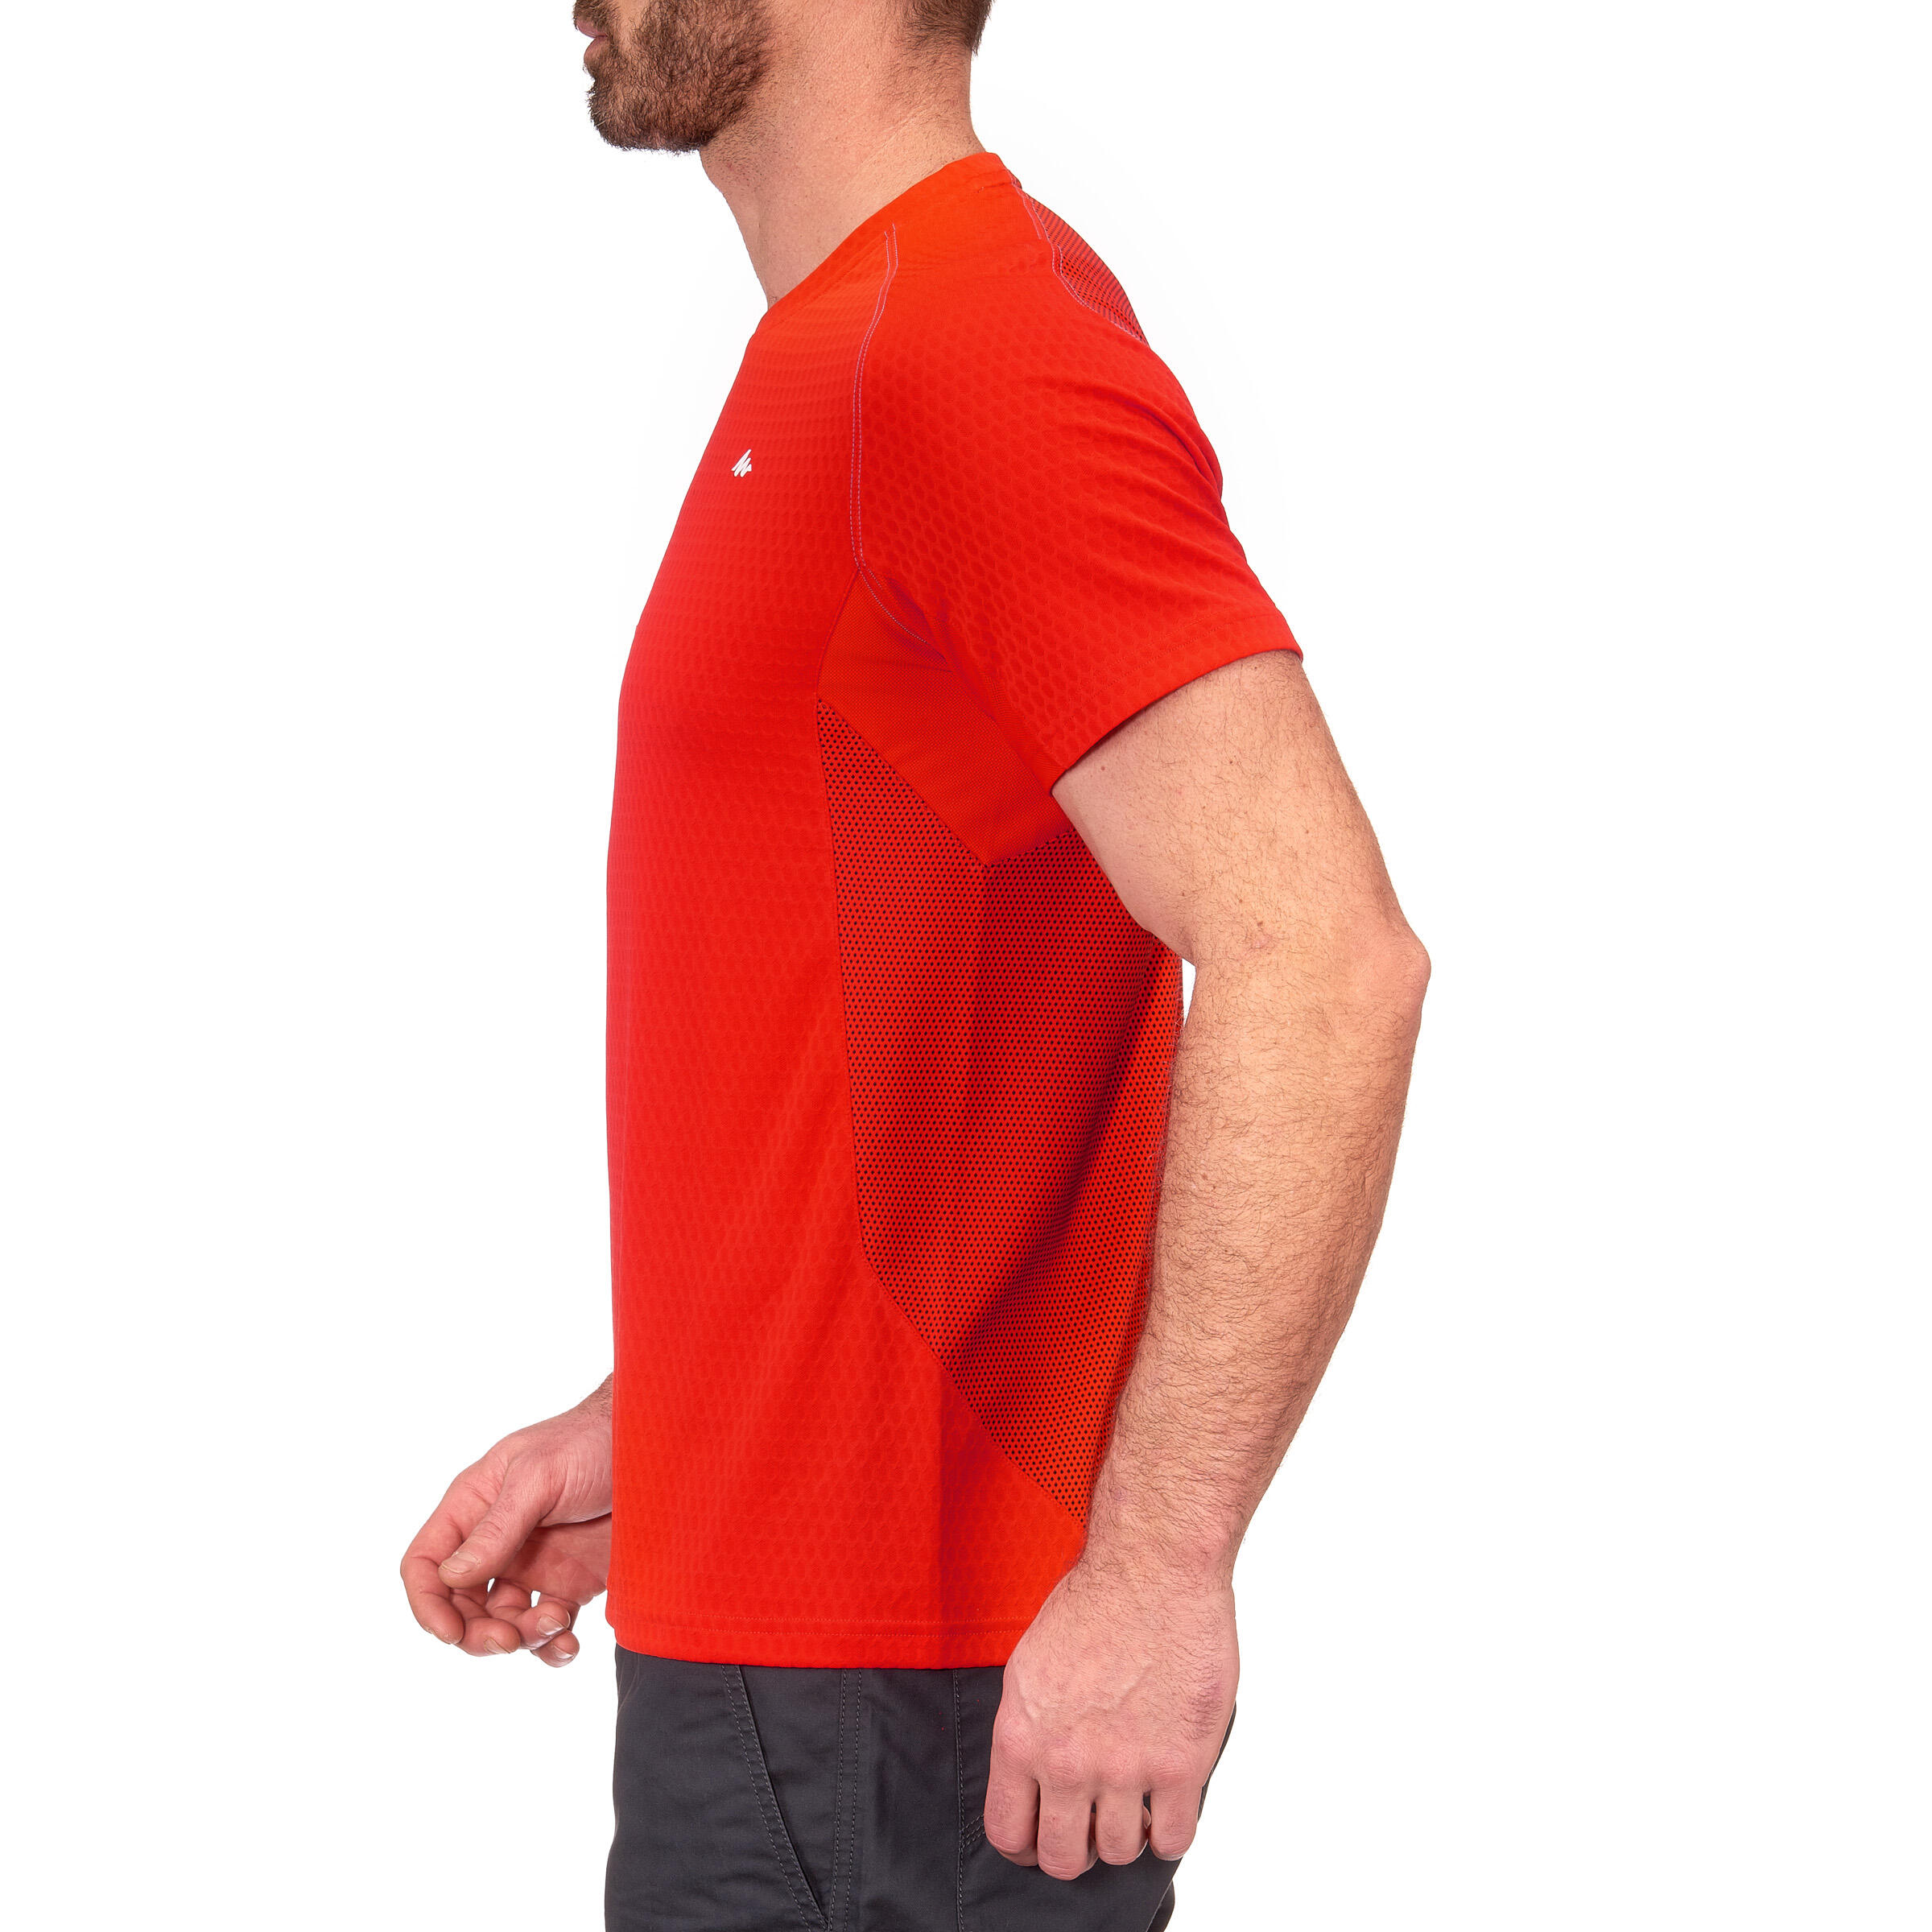 TechFRESH 500 Freeze Men's Short-Sleeve Hiking T-Shirt - Red 5/9